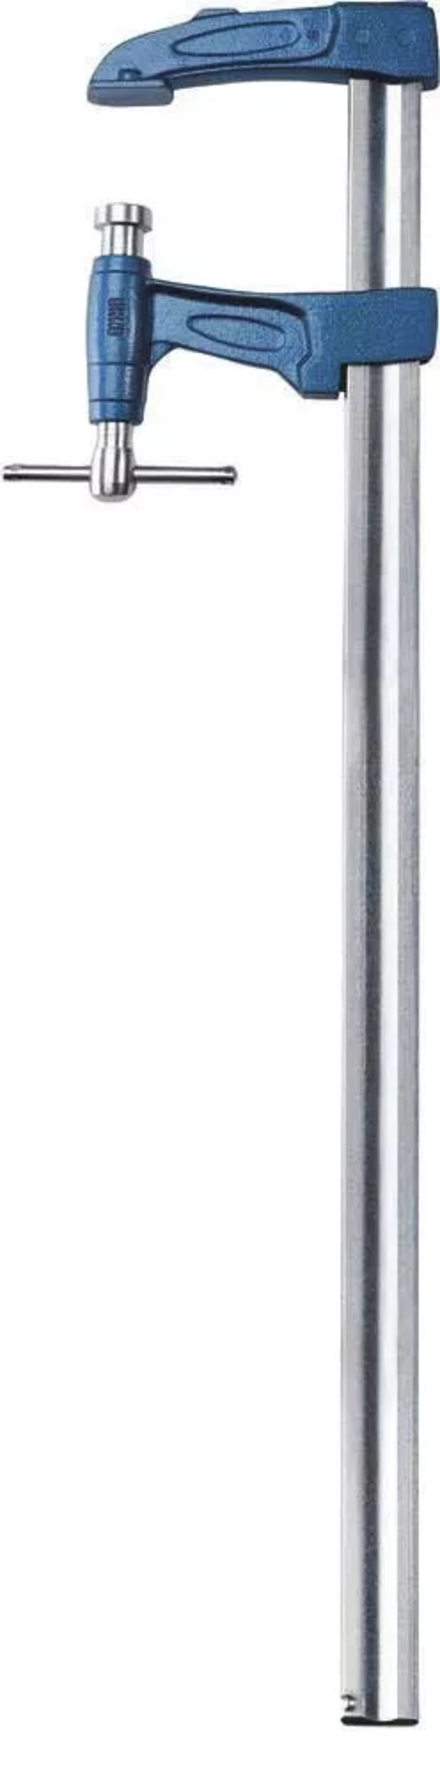 Serre joint a pompe super extra 35x8 serrage 80cm URKO - 15684